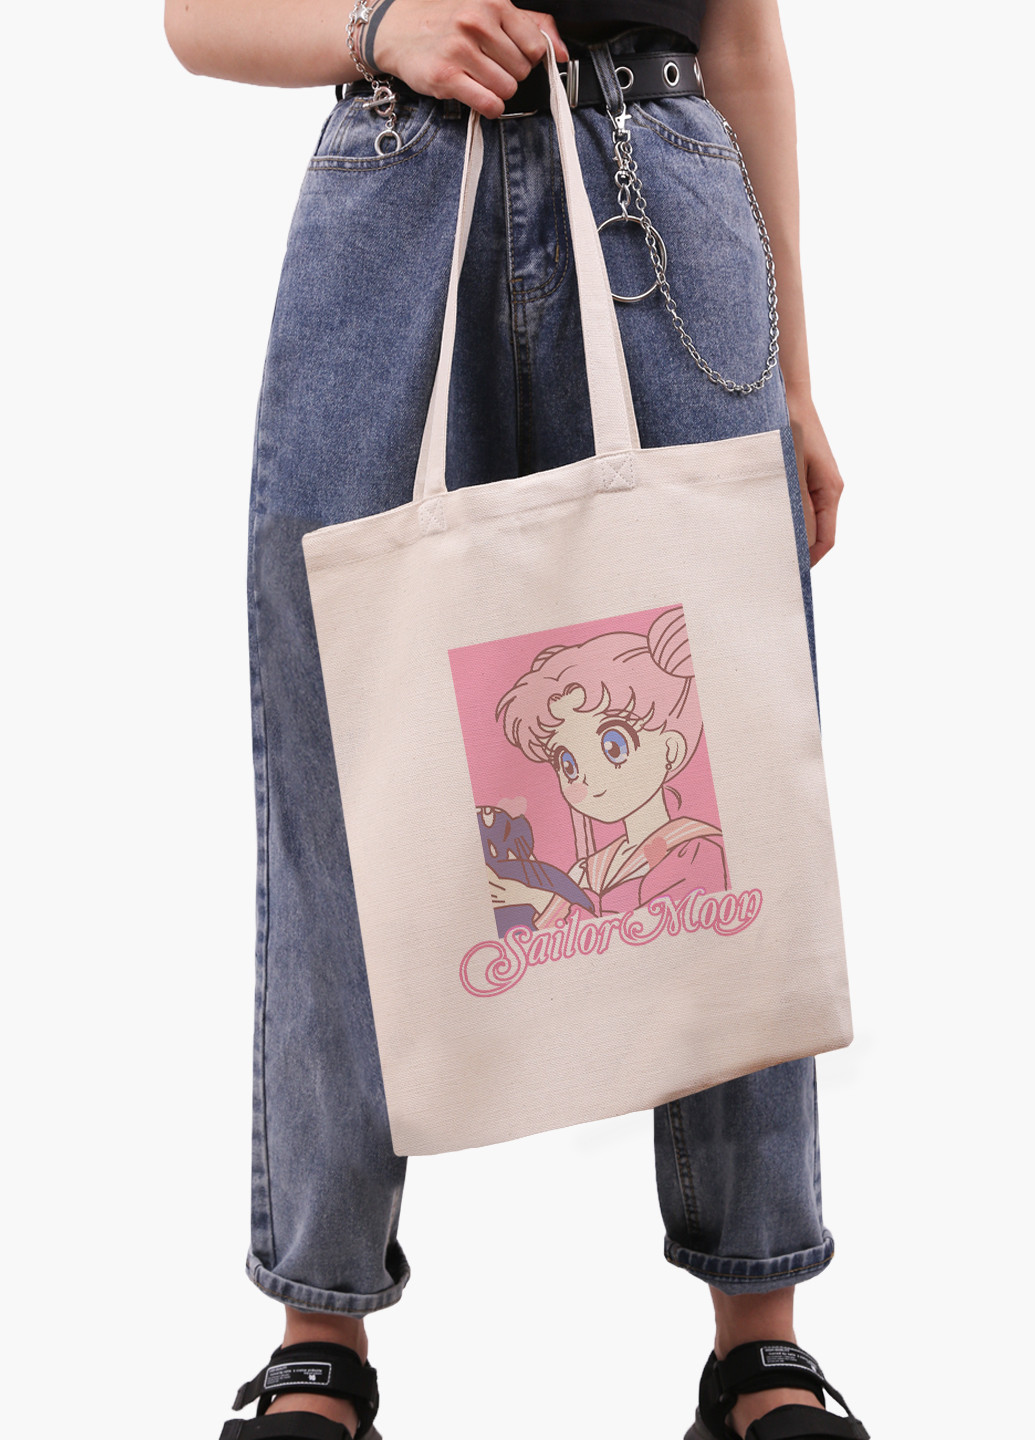 Еко сумка шоппер біла Сейлор Мун (Sailor Moon) (9227-2914-WT-1) екосумка шопер 41*35 см MobiPrint (224806184)